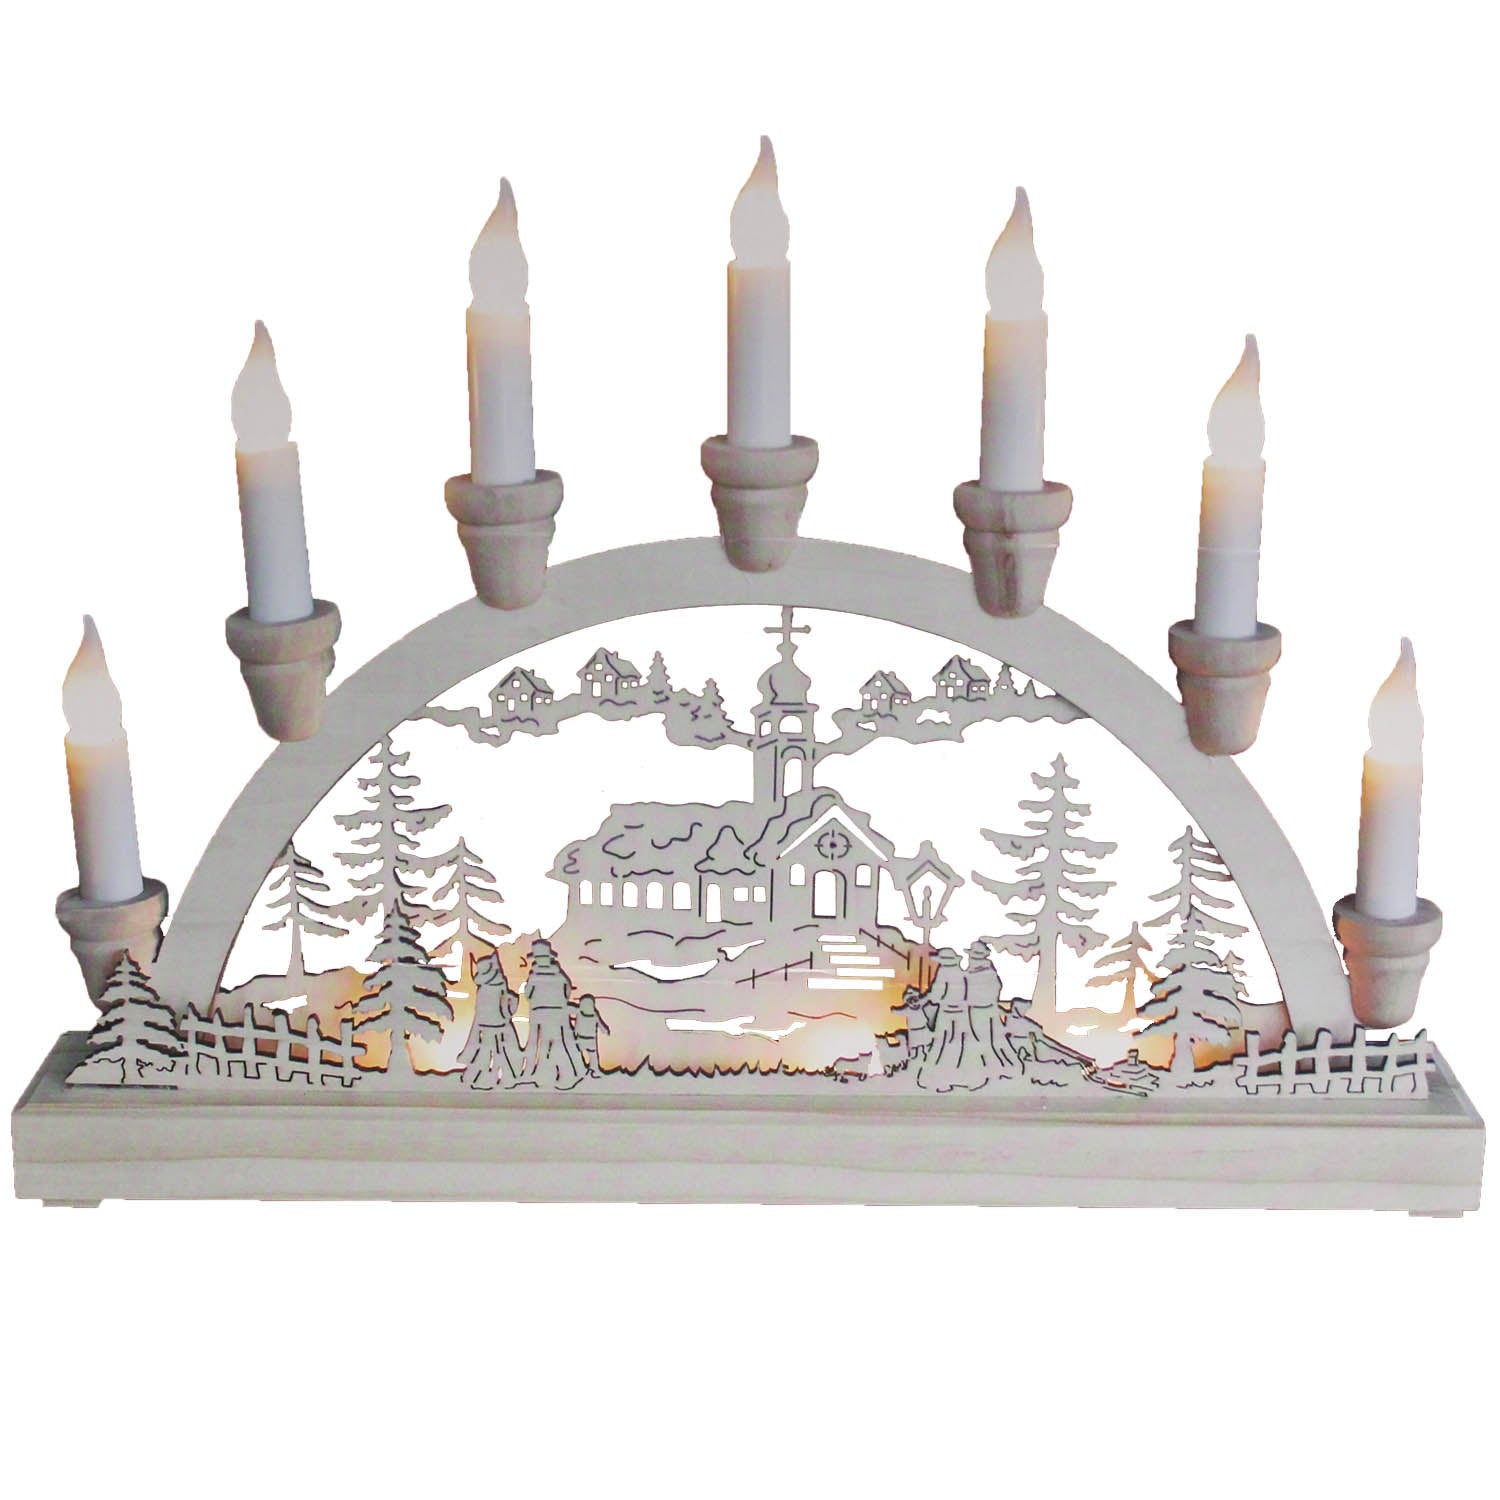 38cm Warm White LED Lights Wooden Candle Bridge Christmas Decoration